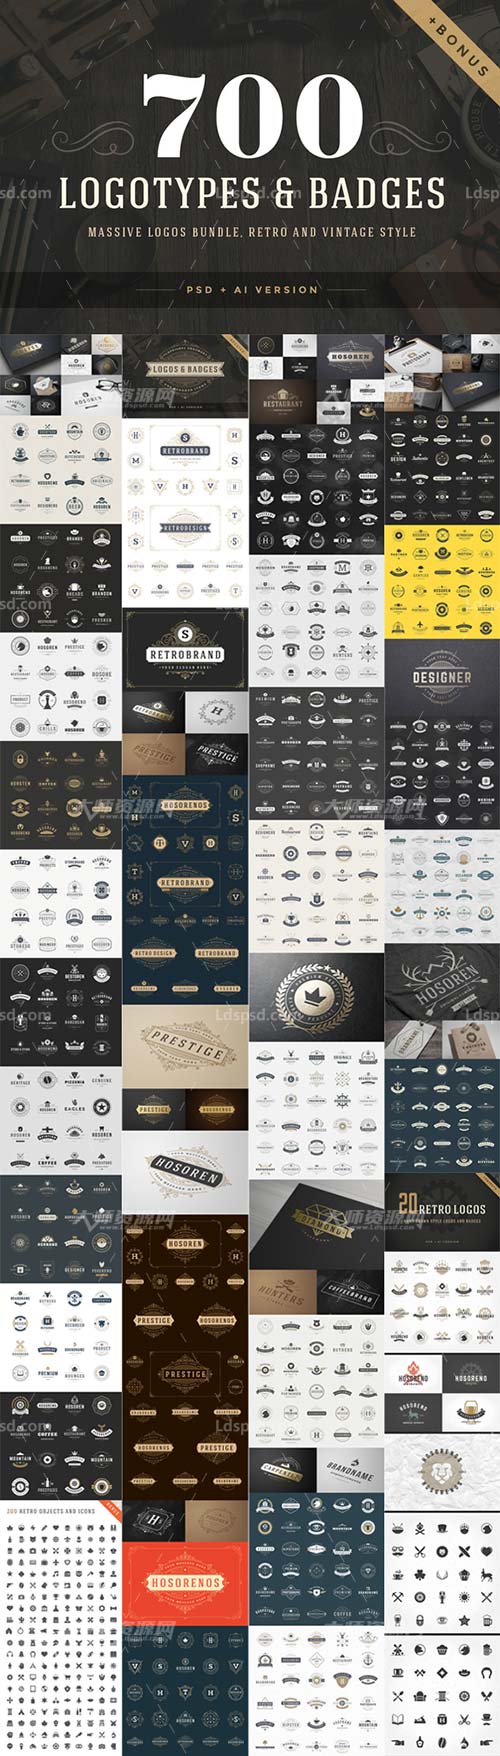 700 logos and badges bundle,700个矢量标志和徽章大合集